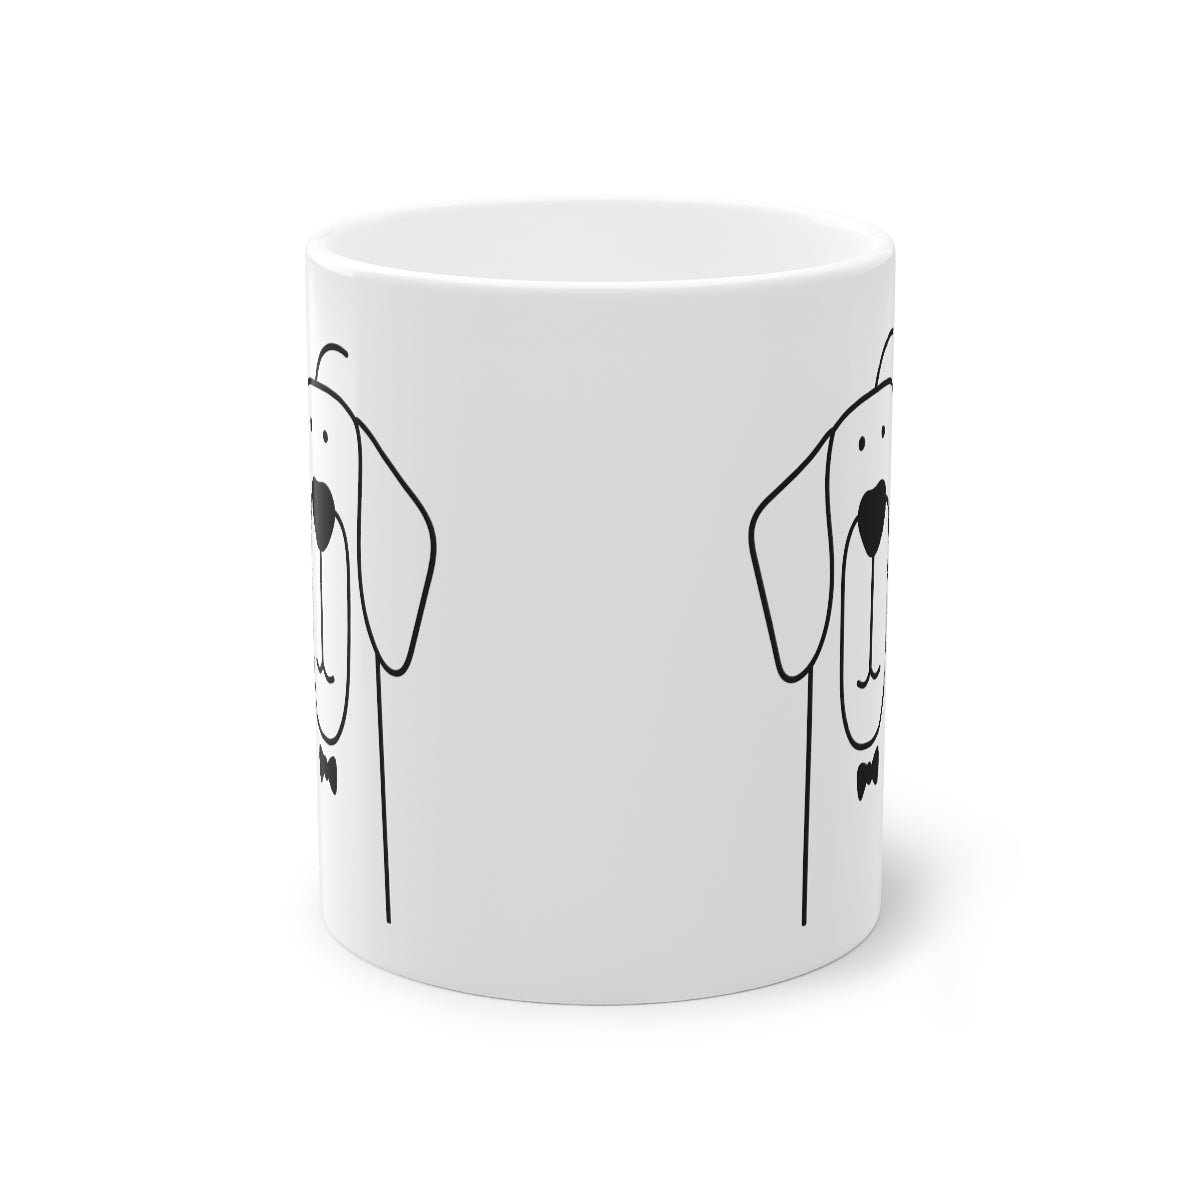 Cute dog Retriever mug, white, 325 ml / 11 oz Coffee mug, tea mug for kids, children, puppies mug for dog lovers, dog owners